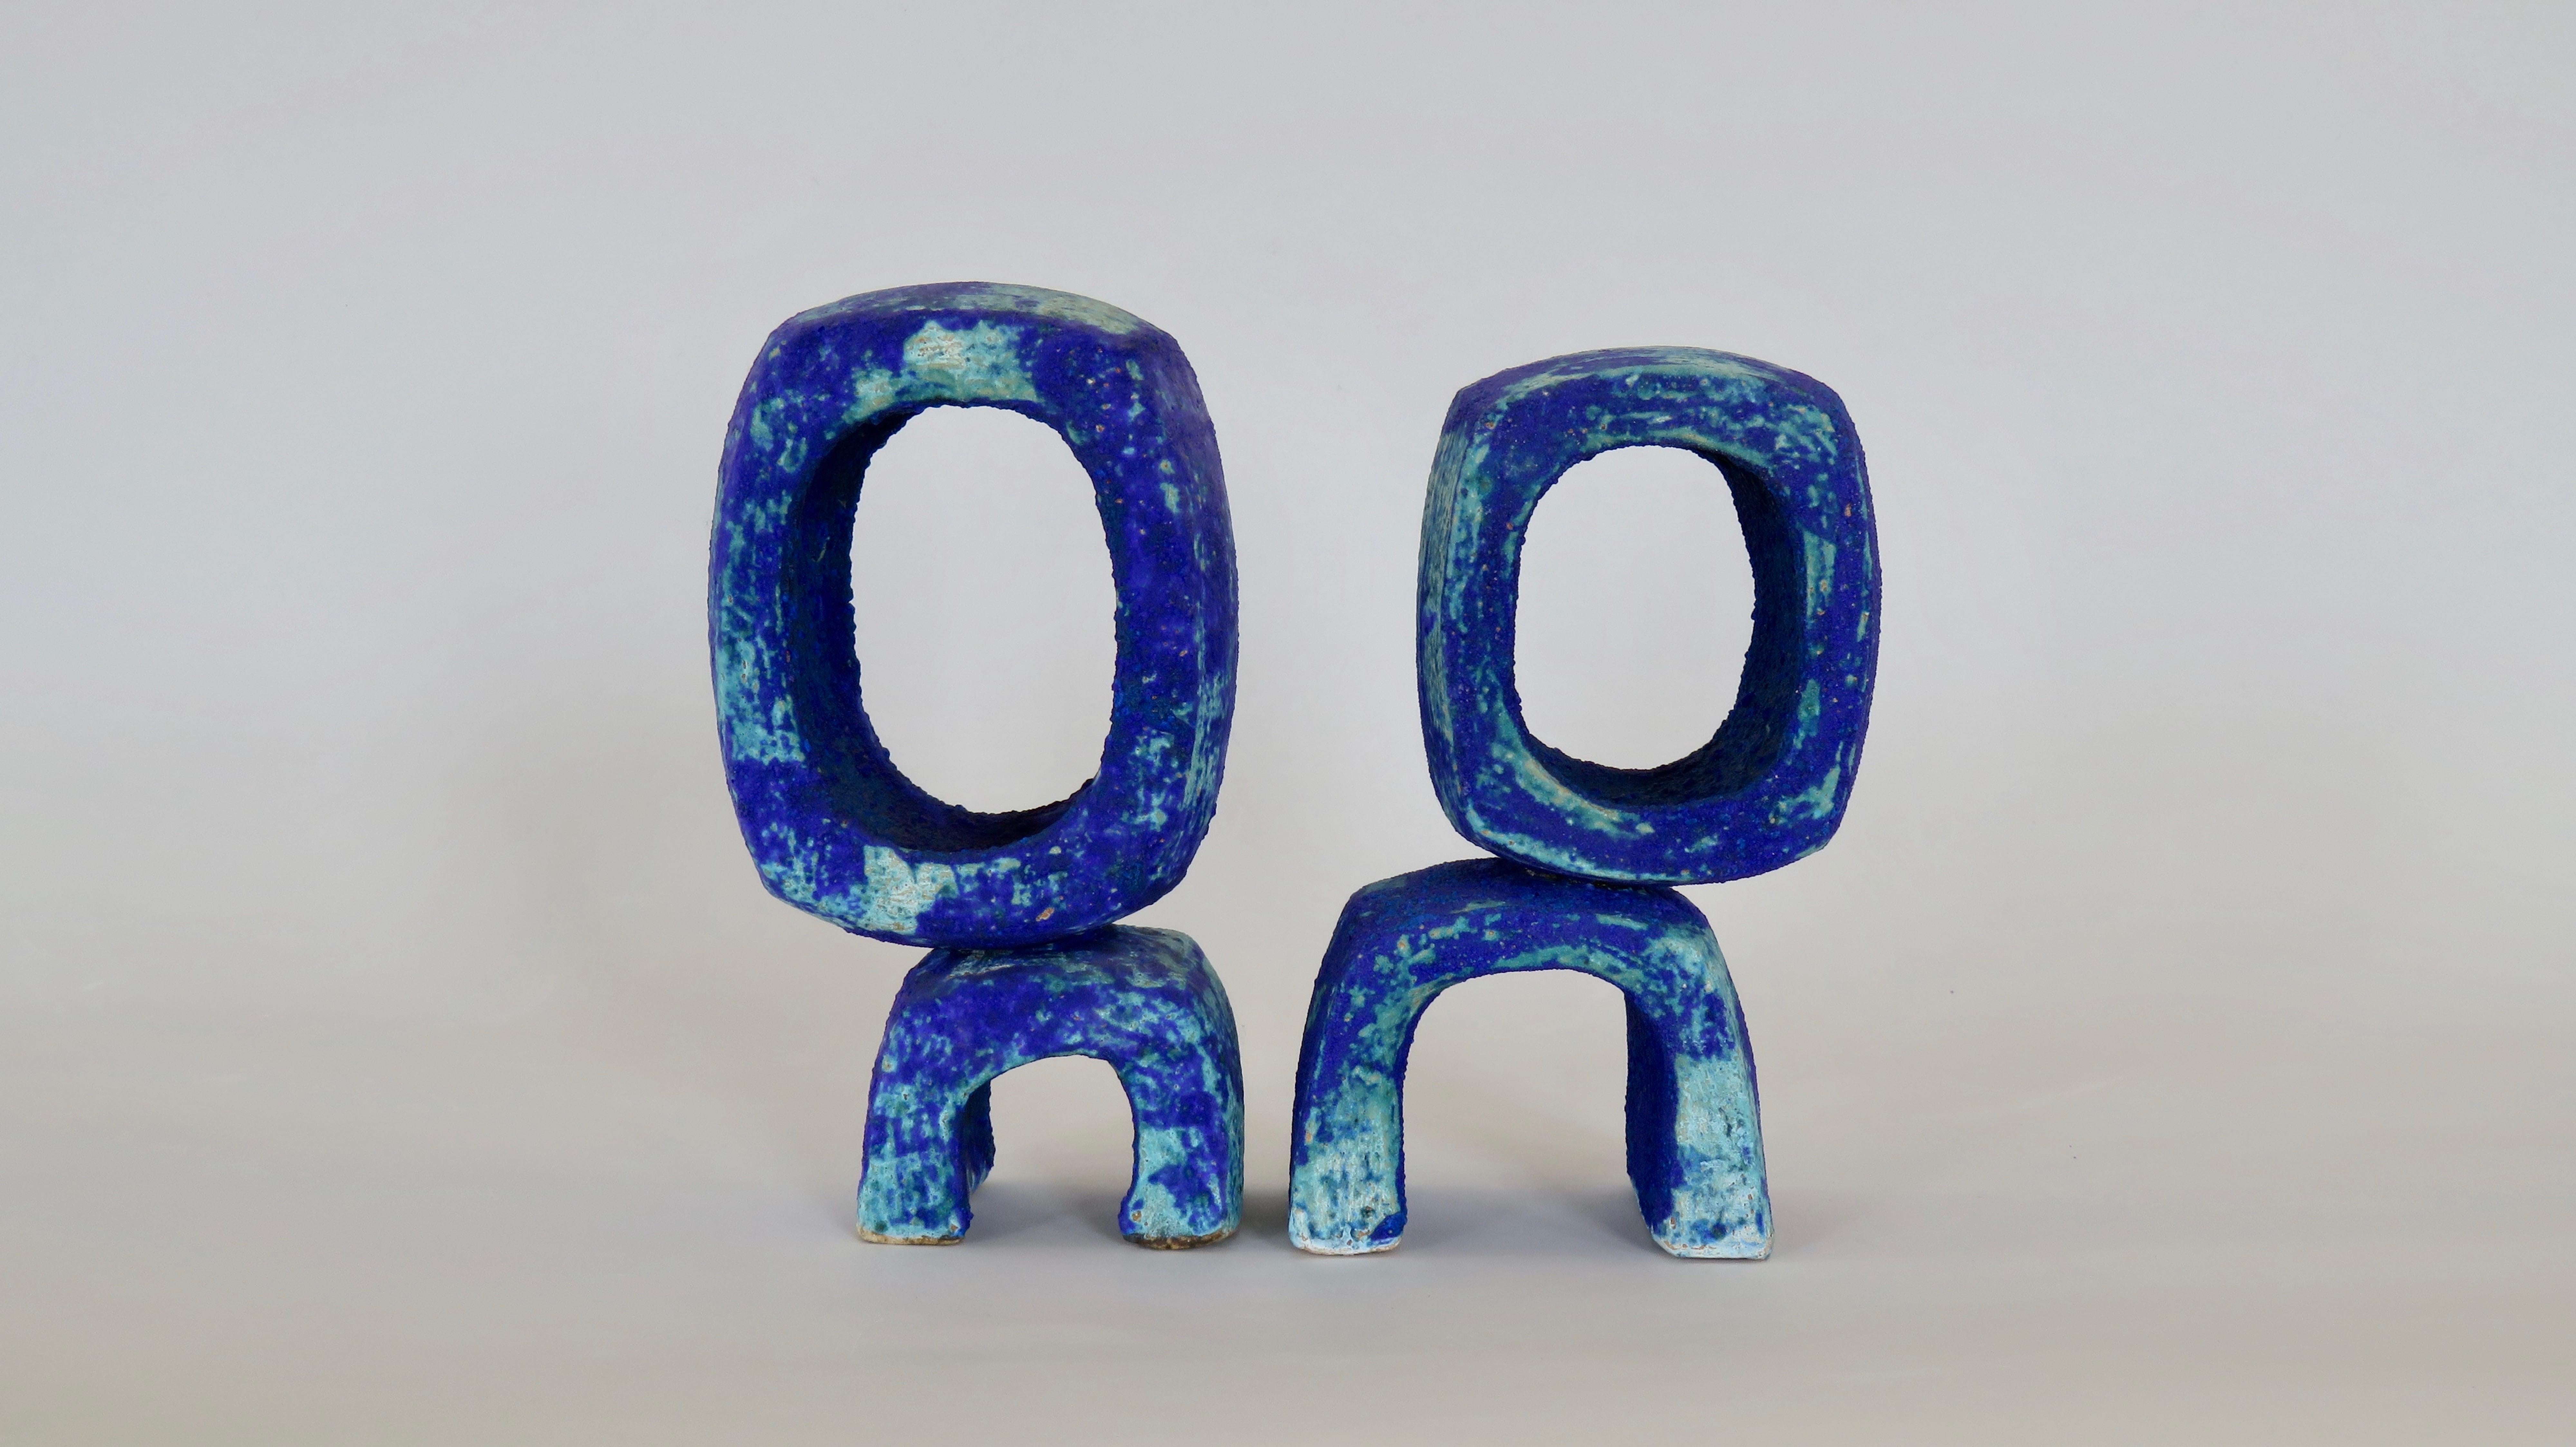 Handbuilt Standing Oval Ceramic Sculpture in Turquoise and Deep Blue #2 (Keramik)